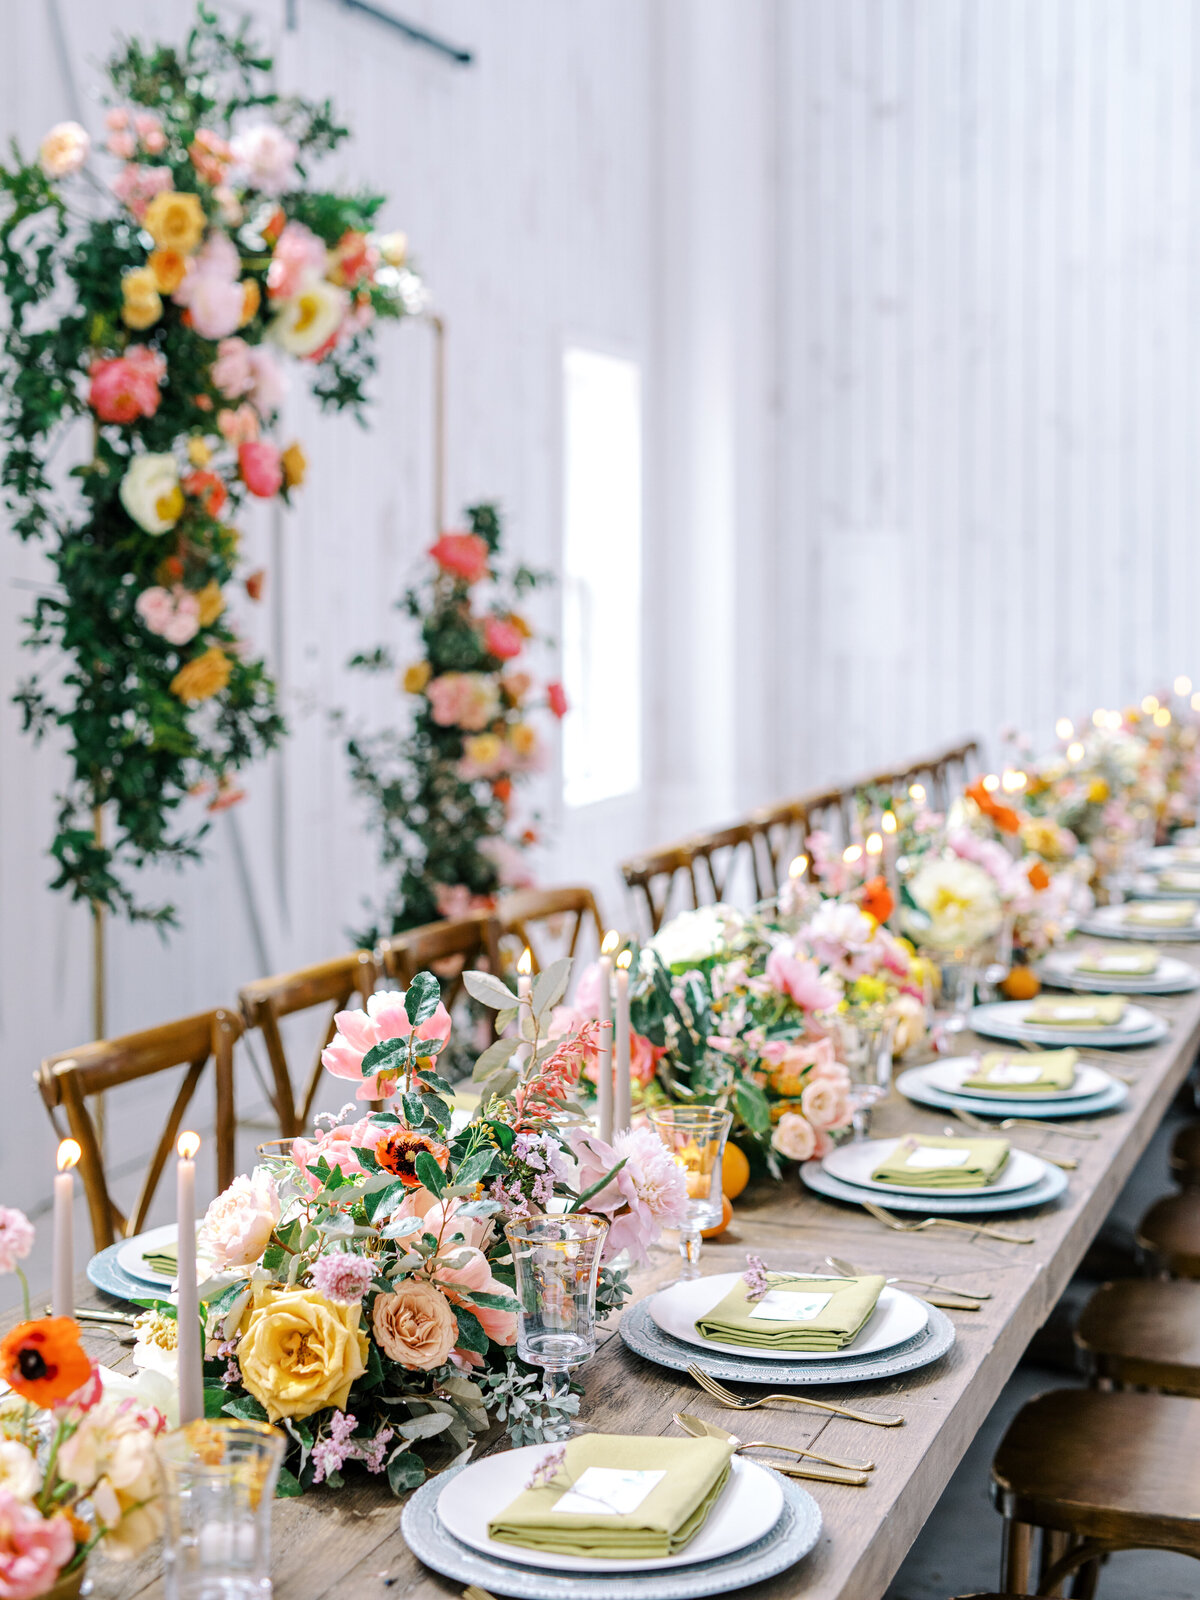 max-owens-design-bright-summer-wedding-16-long-table